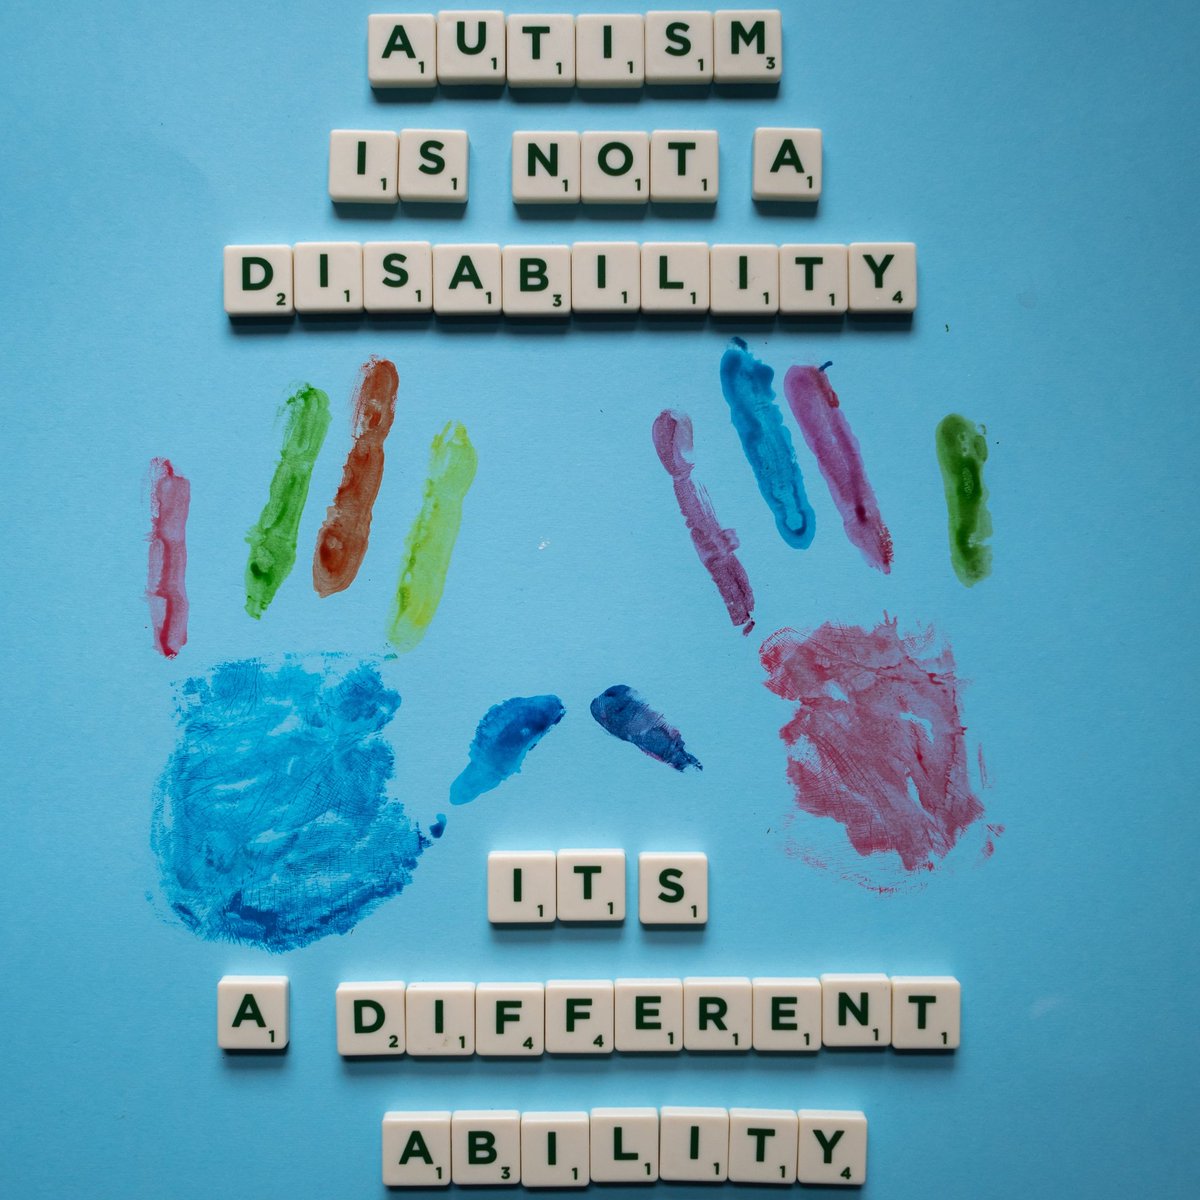 Do not dis my ability. #ASD #Autism #AutismAcceptance #AutismAwareness #inclusiveminds #supportcoordination